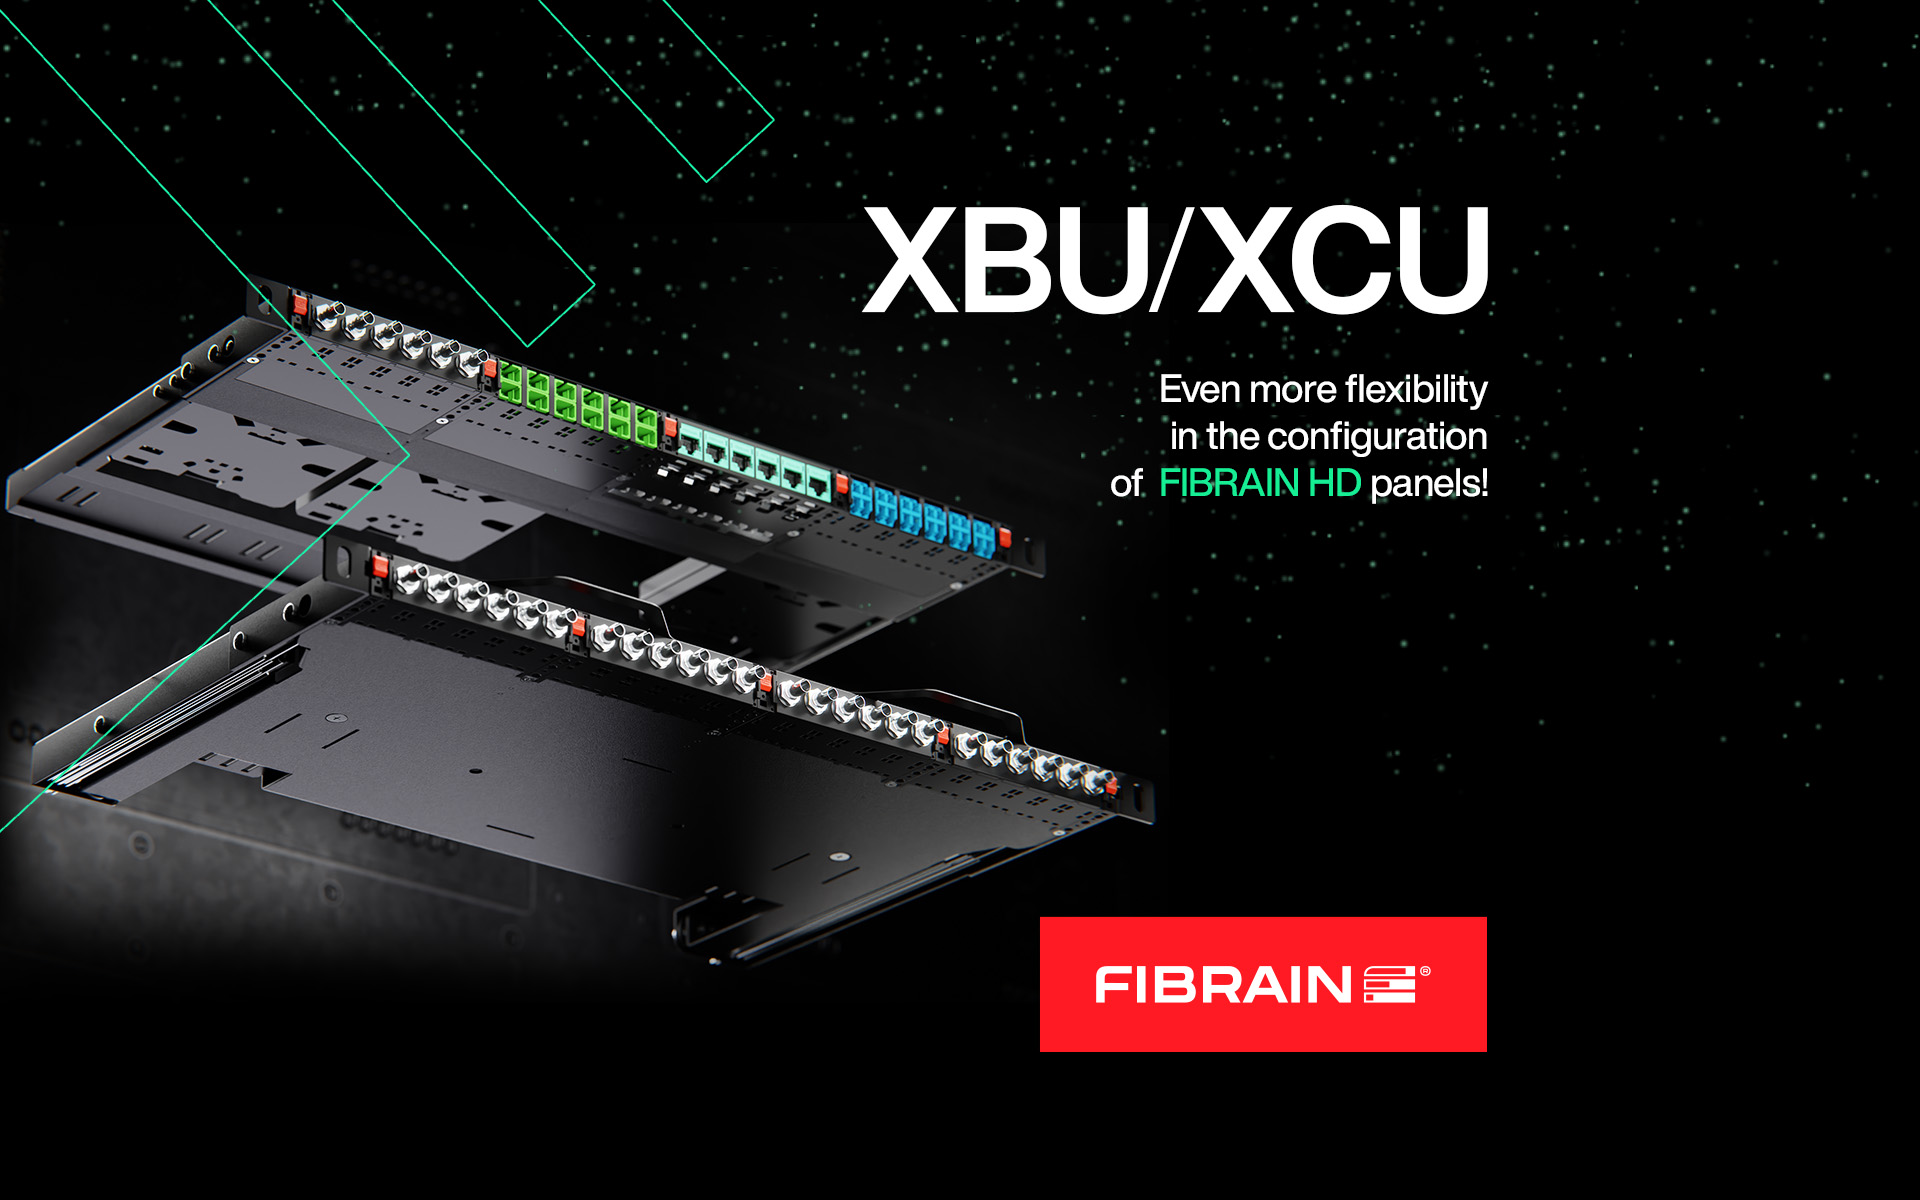 Even more flexibility in the configuration of FIBRAIN HD panels!